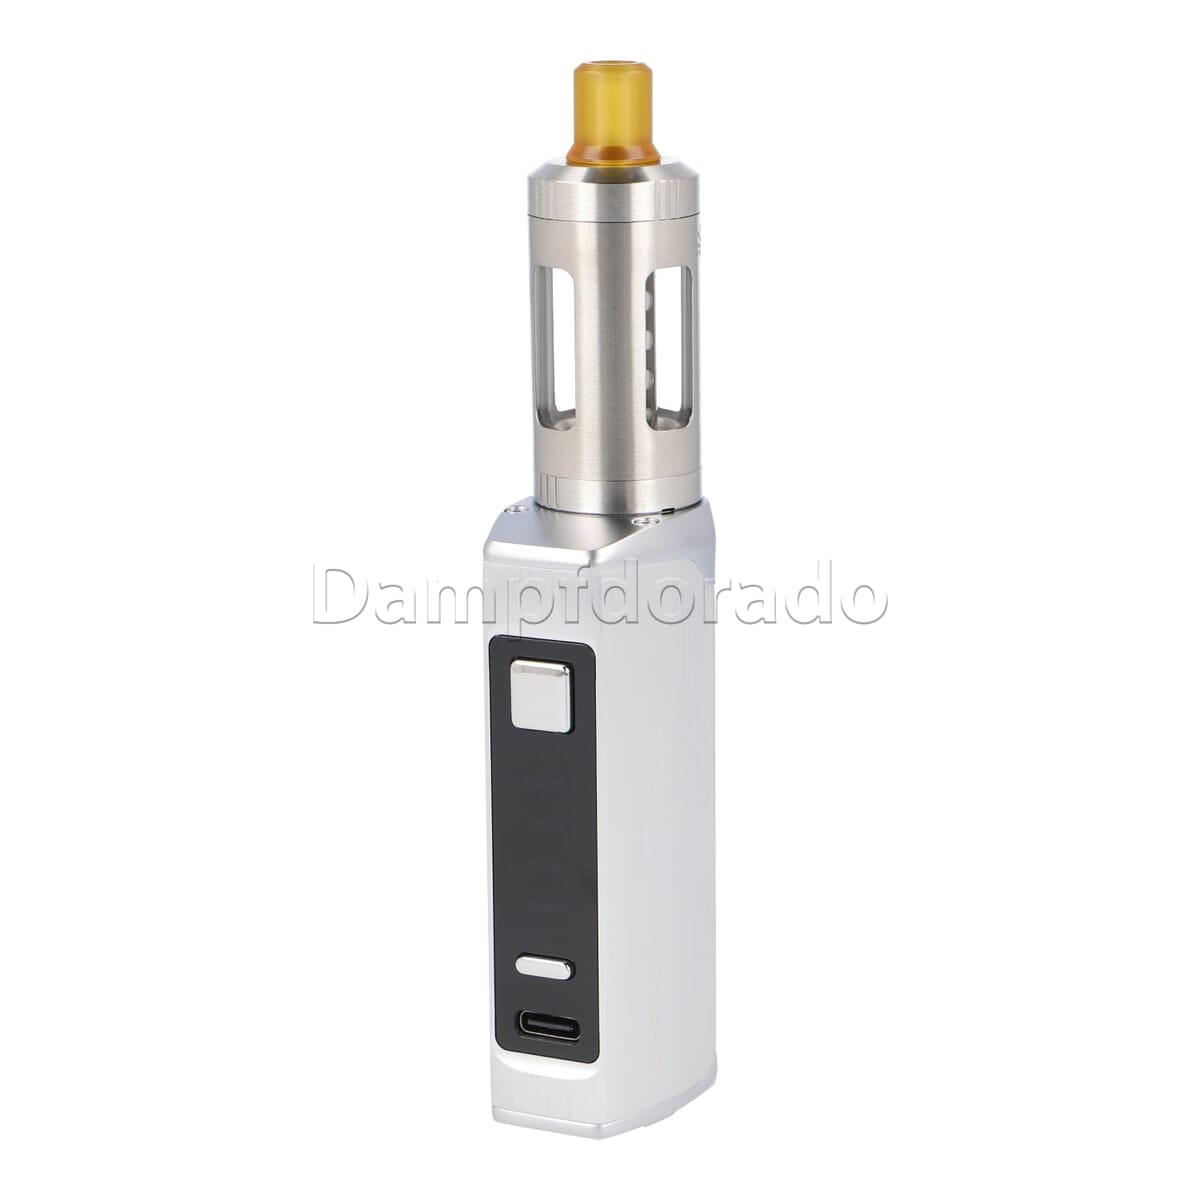 Innokin Endura T18 2 Kit E-Zigarette kaufen